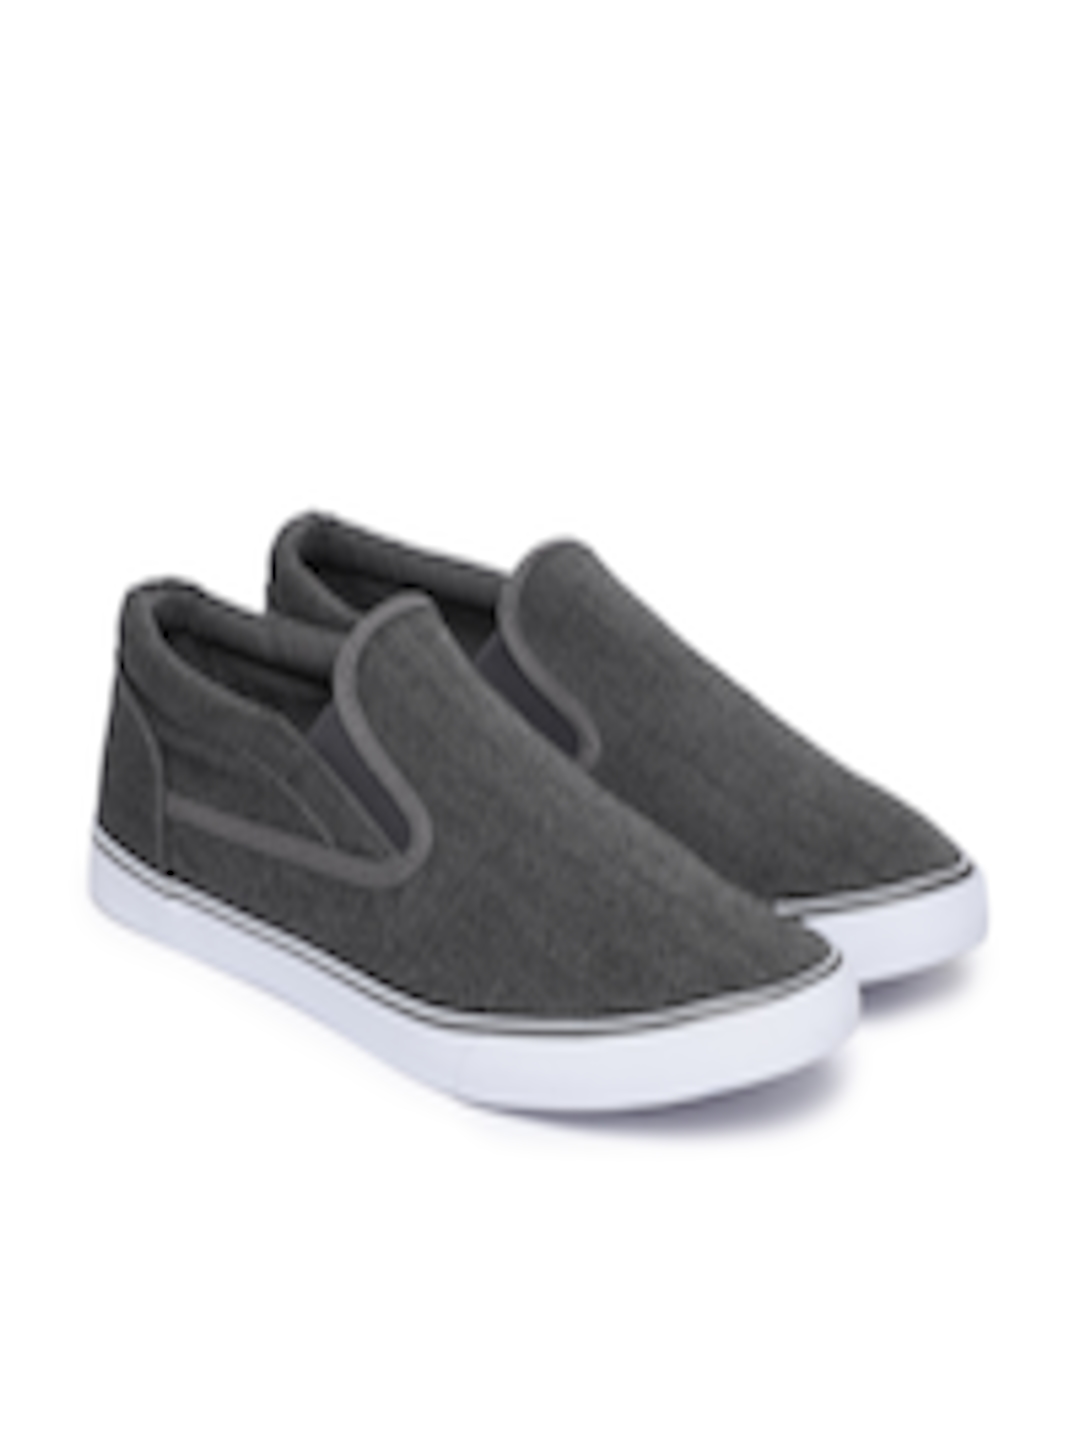 Buy Aeropostale Men Grey Slip On Sneakers - Casual Shoes for Men ...